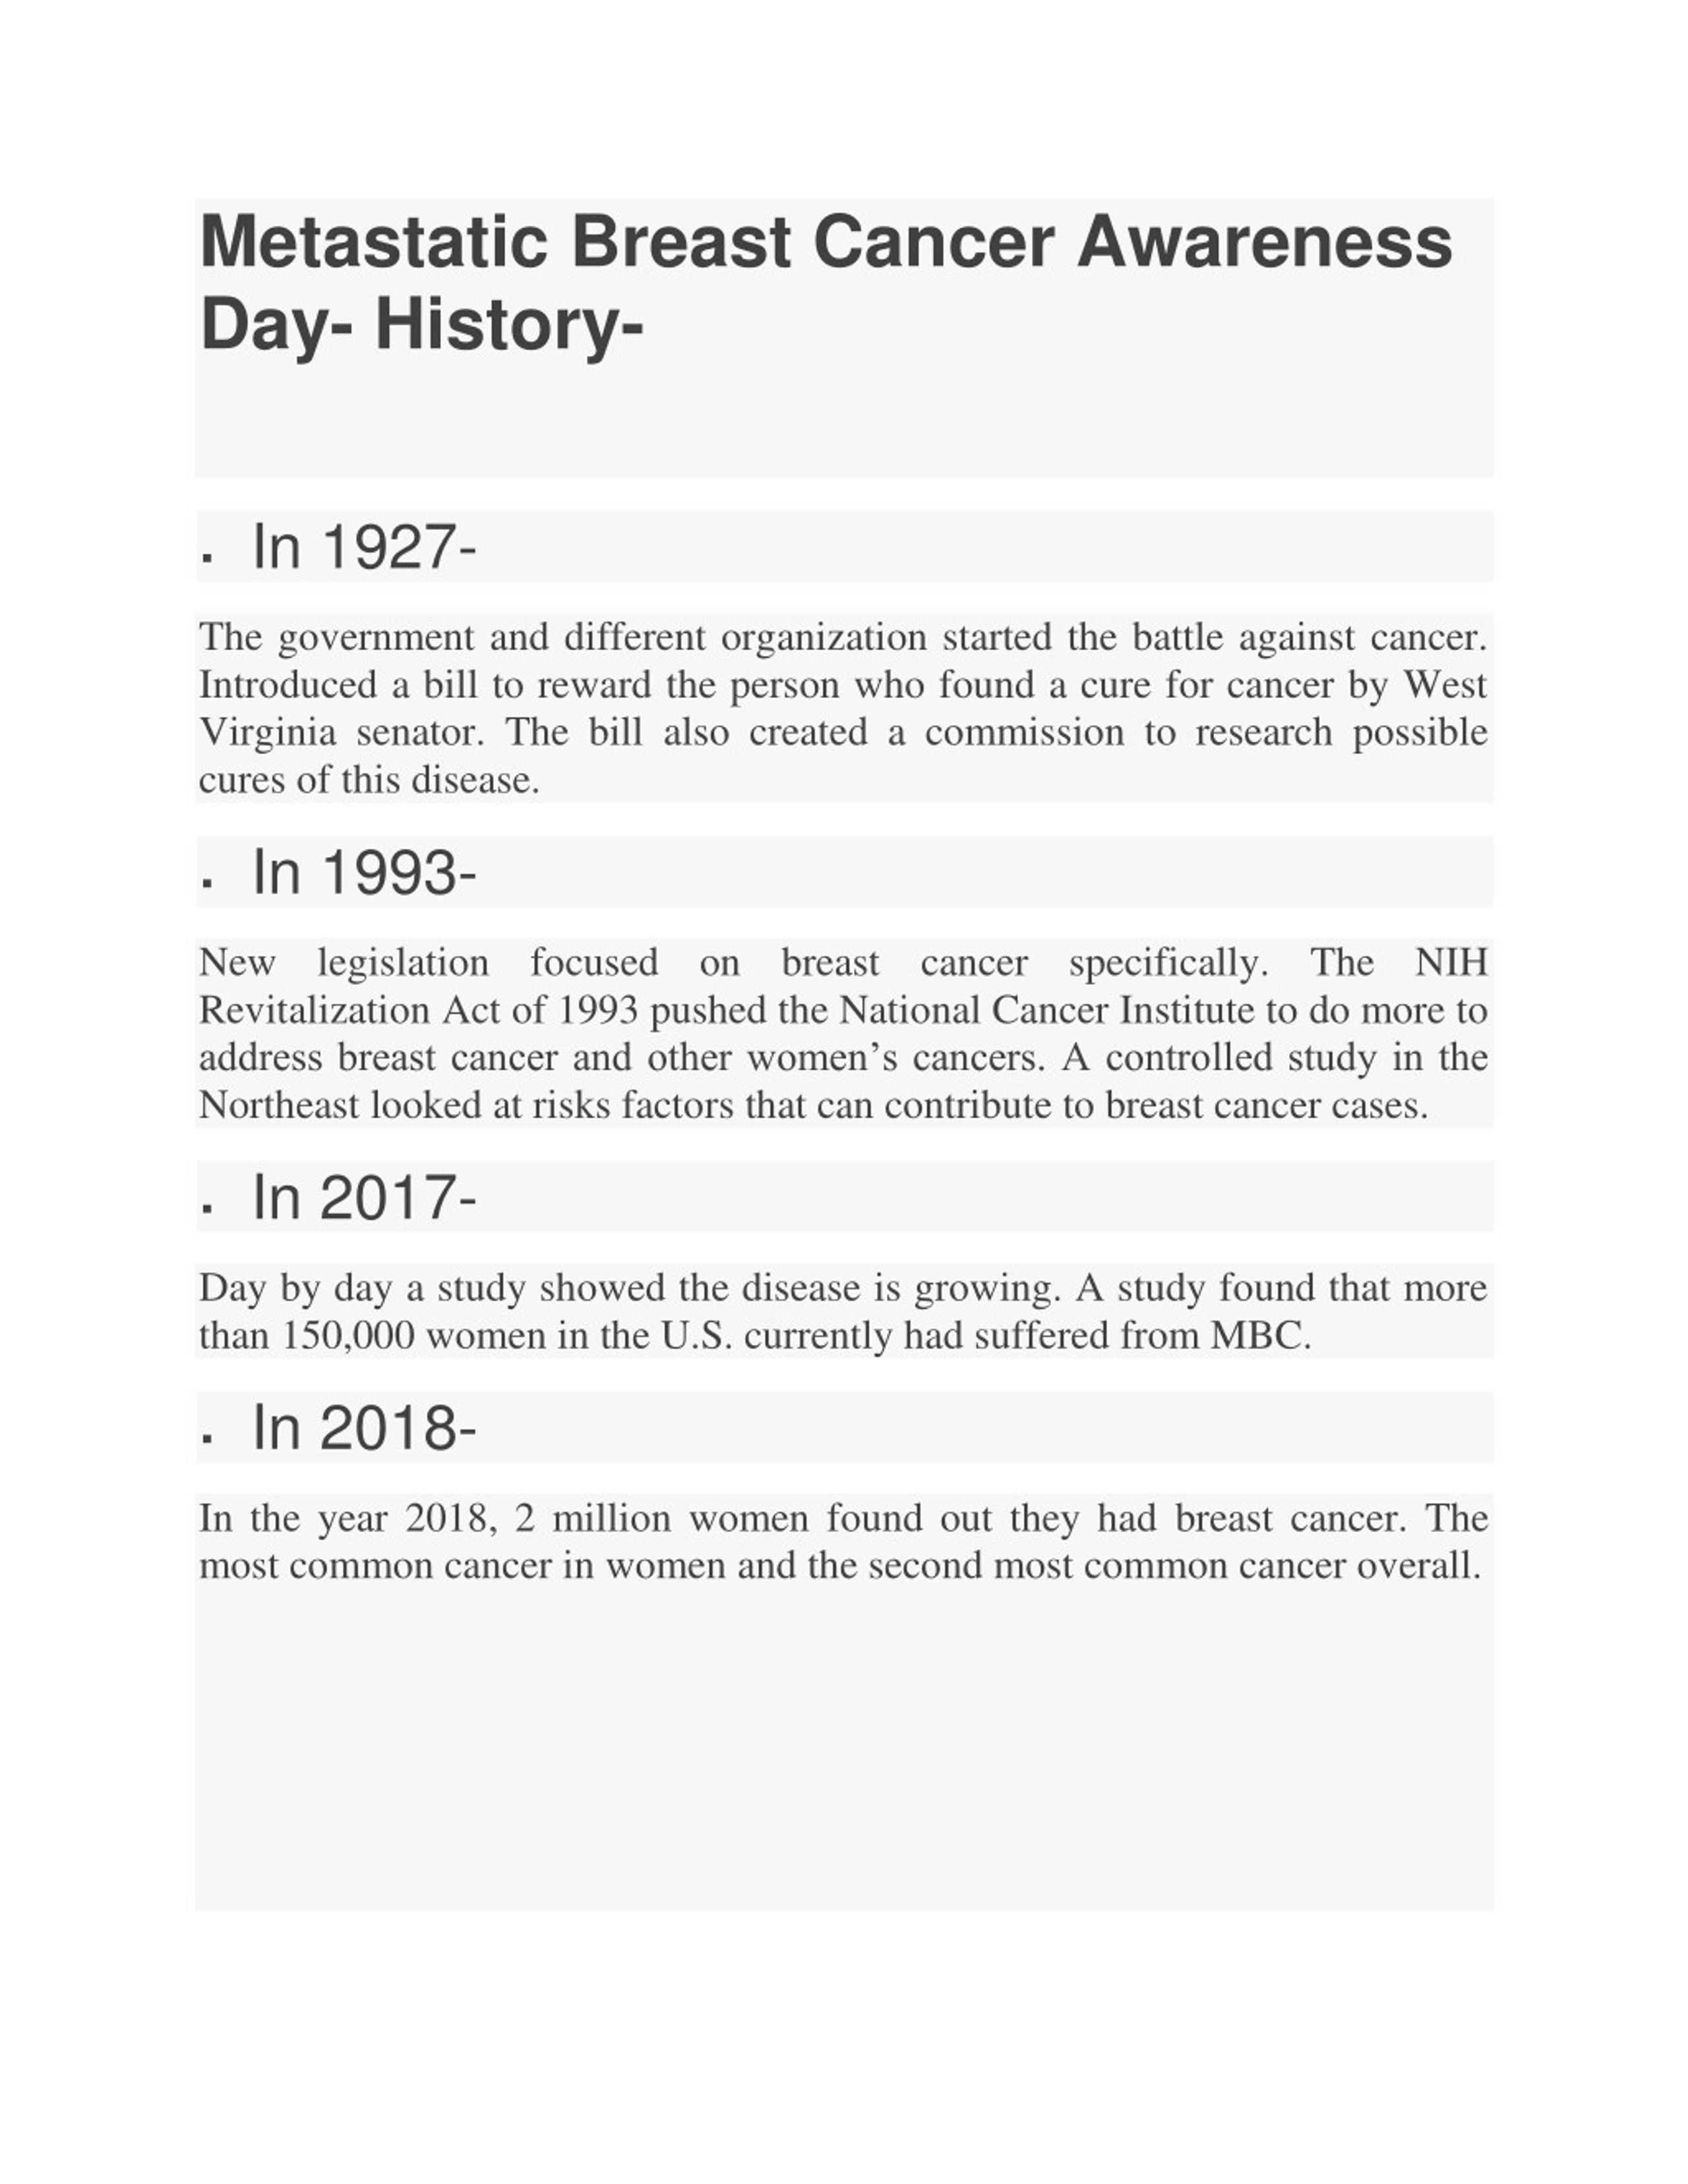 Ppt Metastatic Breast Cancer Awareness Dayoctober 13 2018